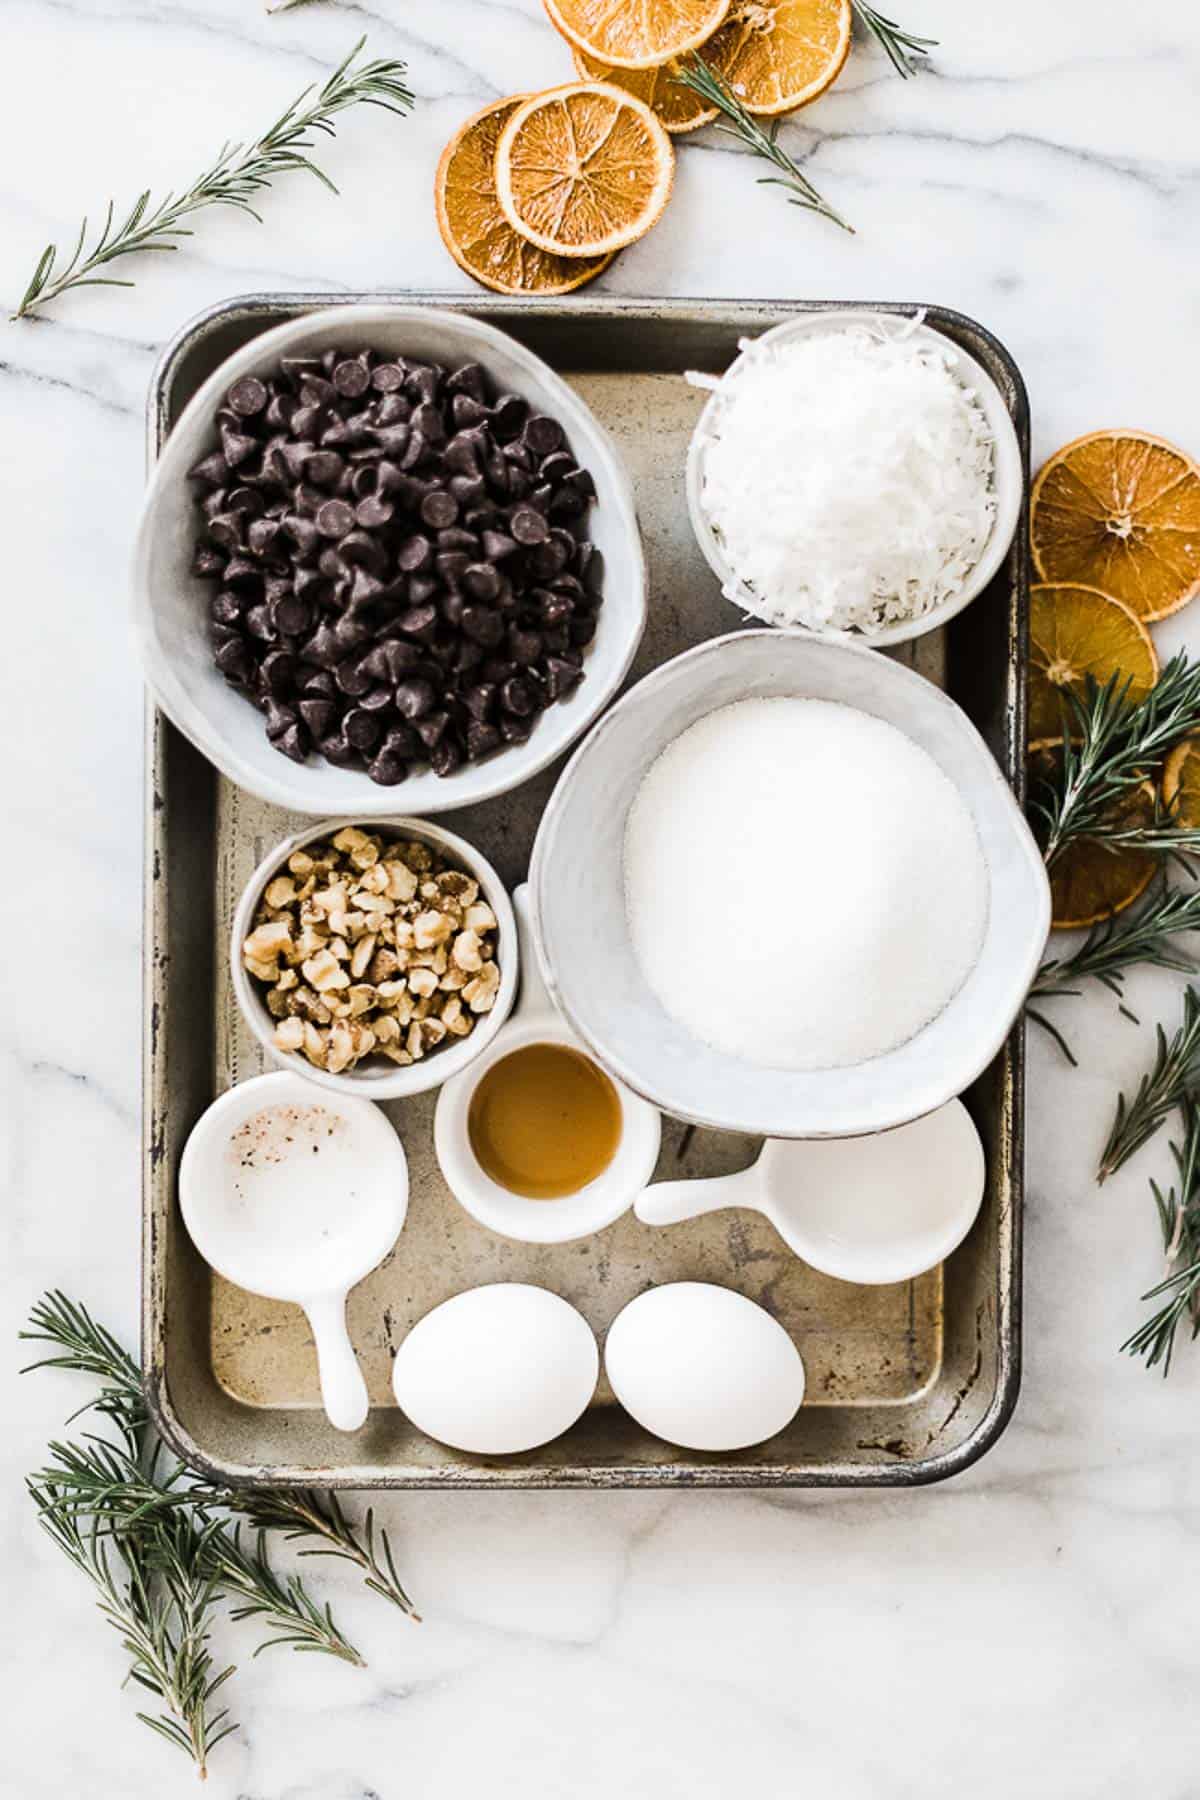 Ingredients needed to make chocolate meringue cookies on a metal baking tray.